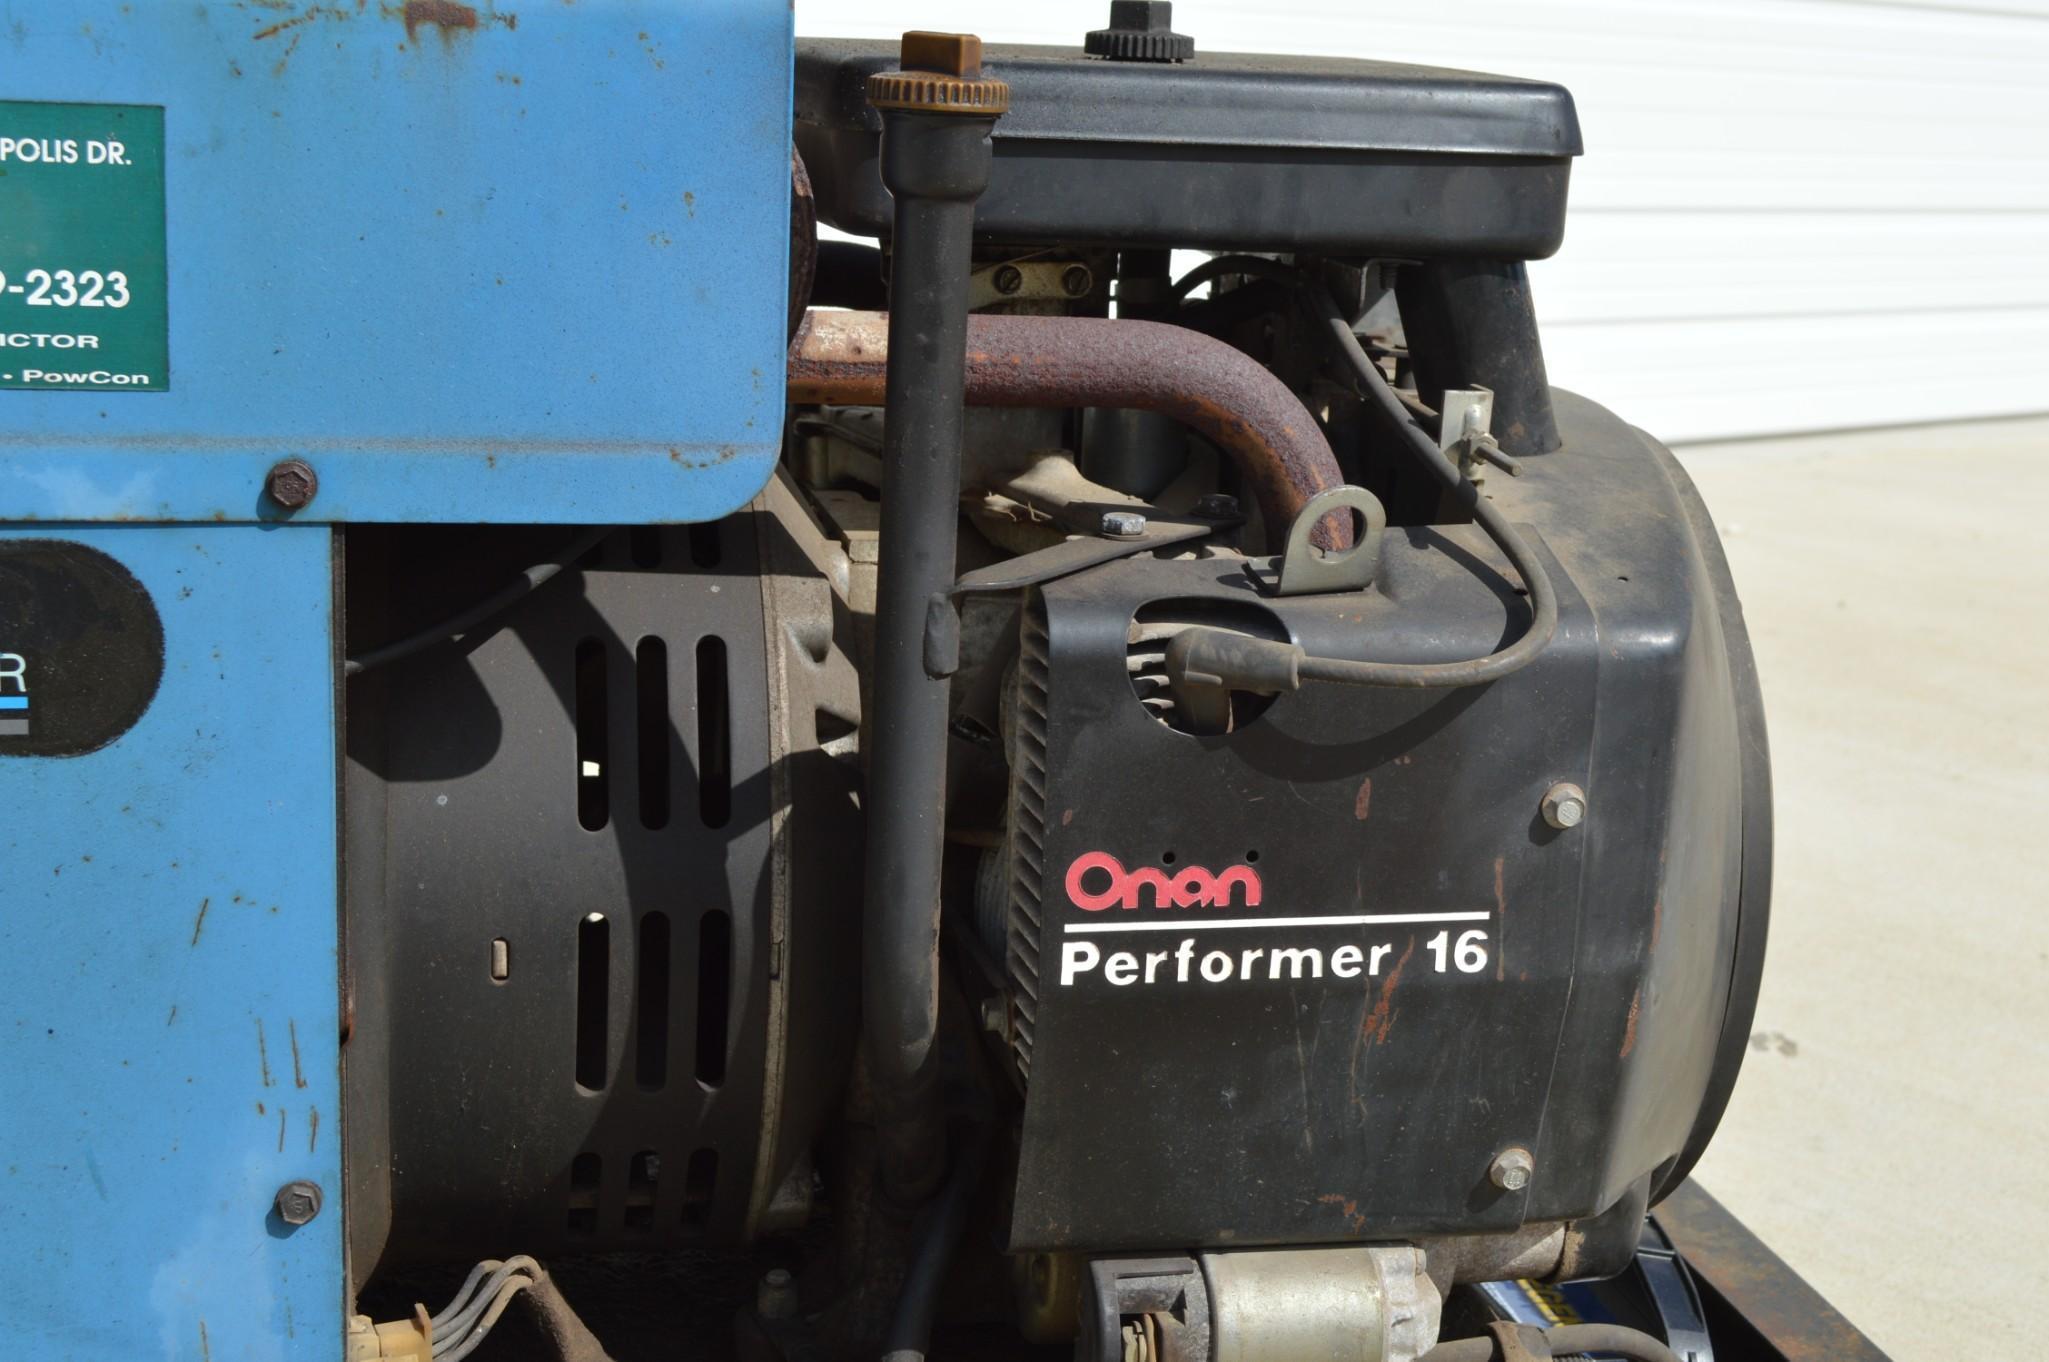 Miller Bobcat 225G Plus Welder, Onan P216 Gas Engine, 8000 Watt Generator